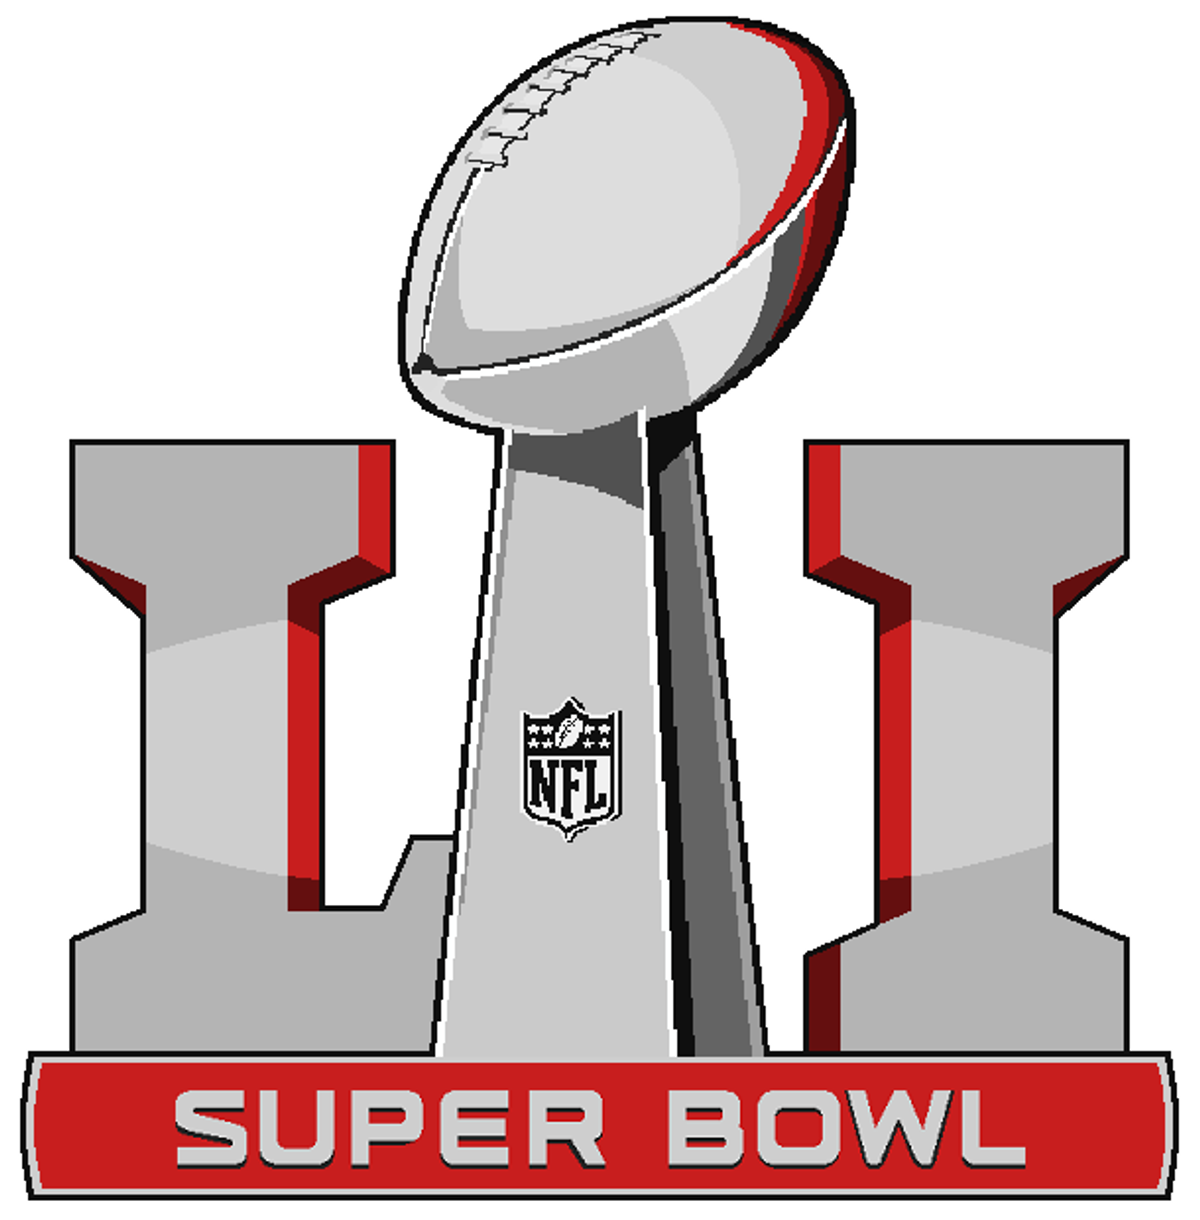 Super Bowl 51 Preview